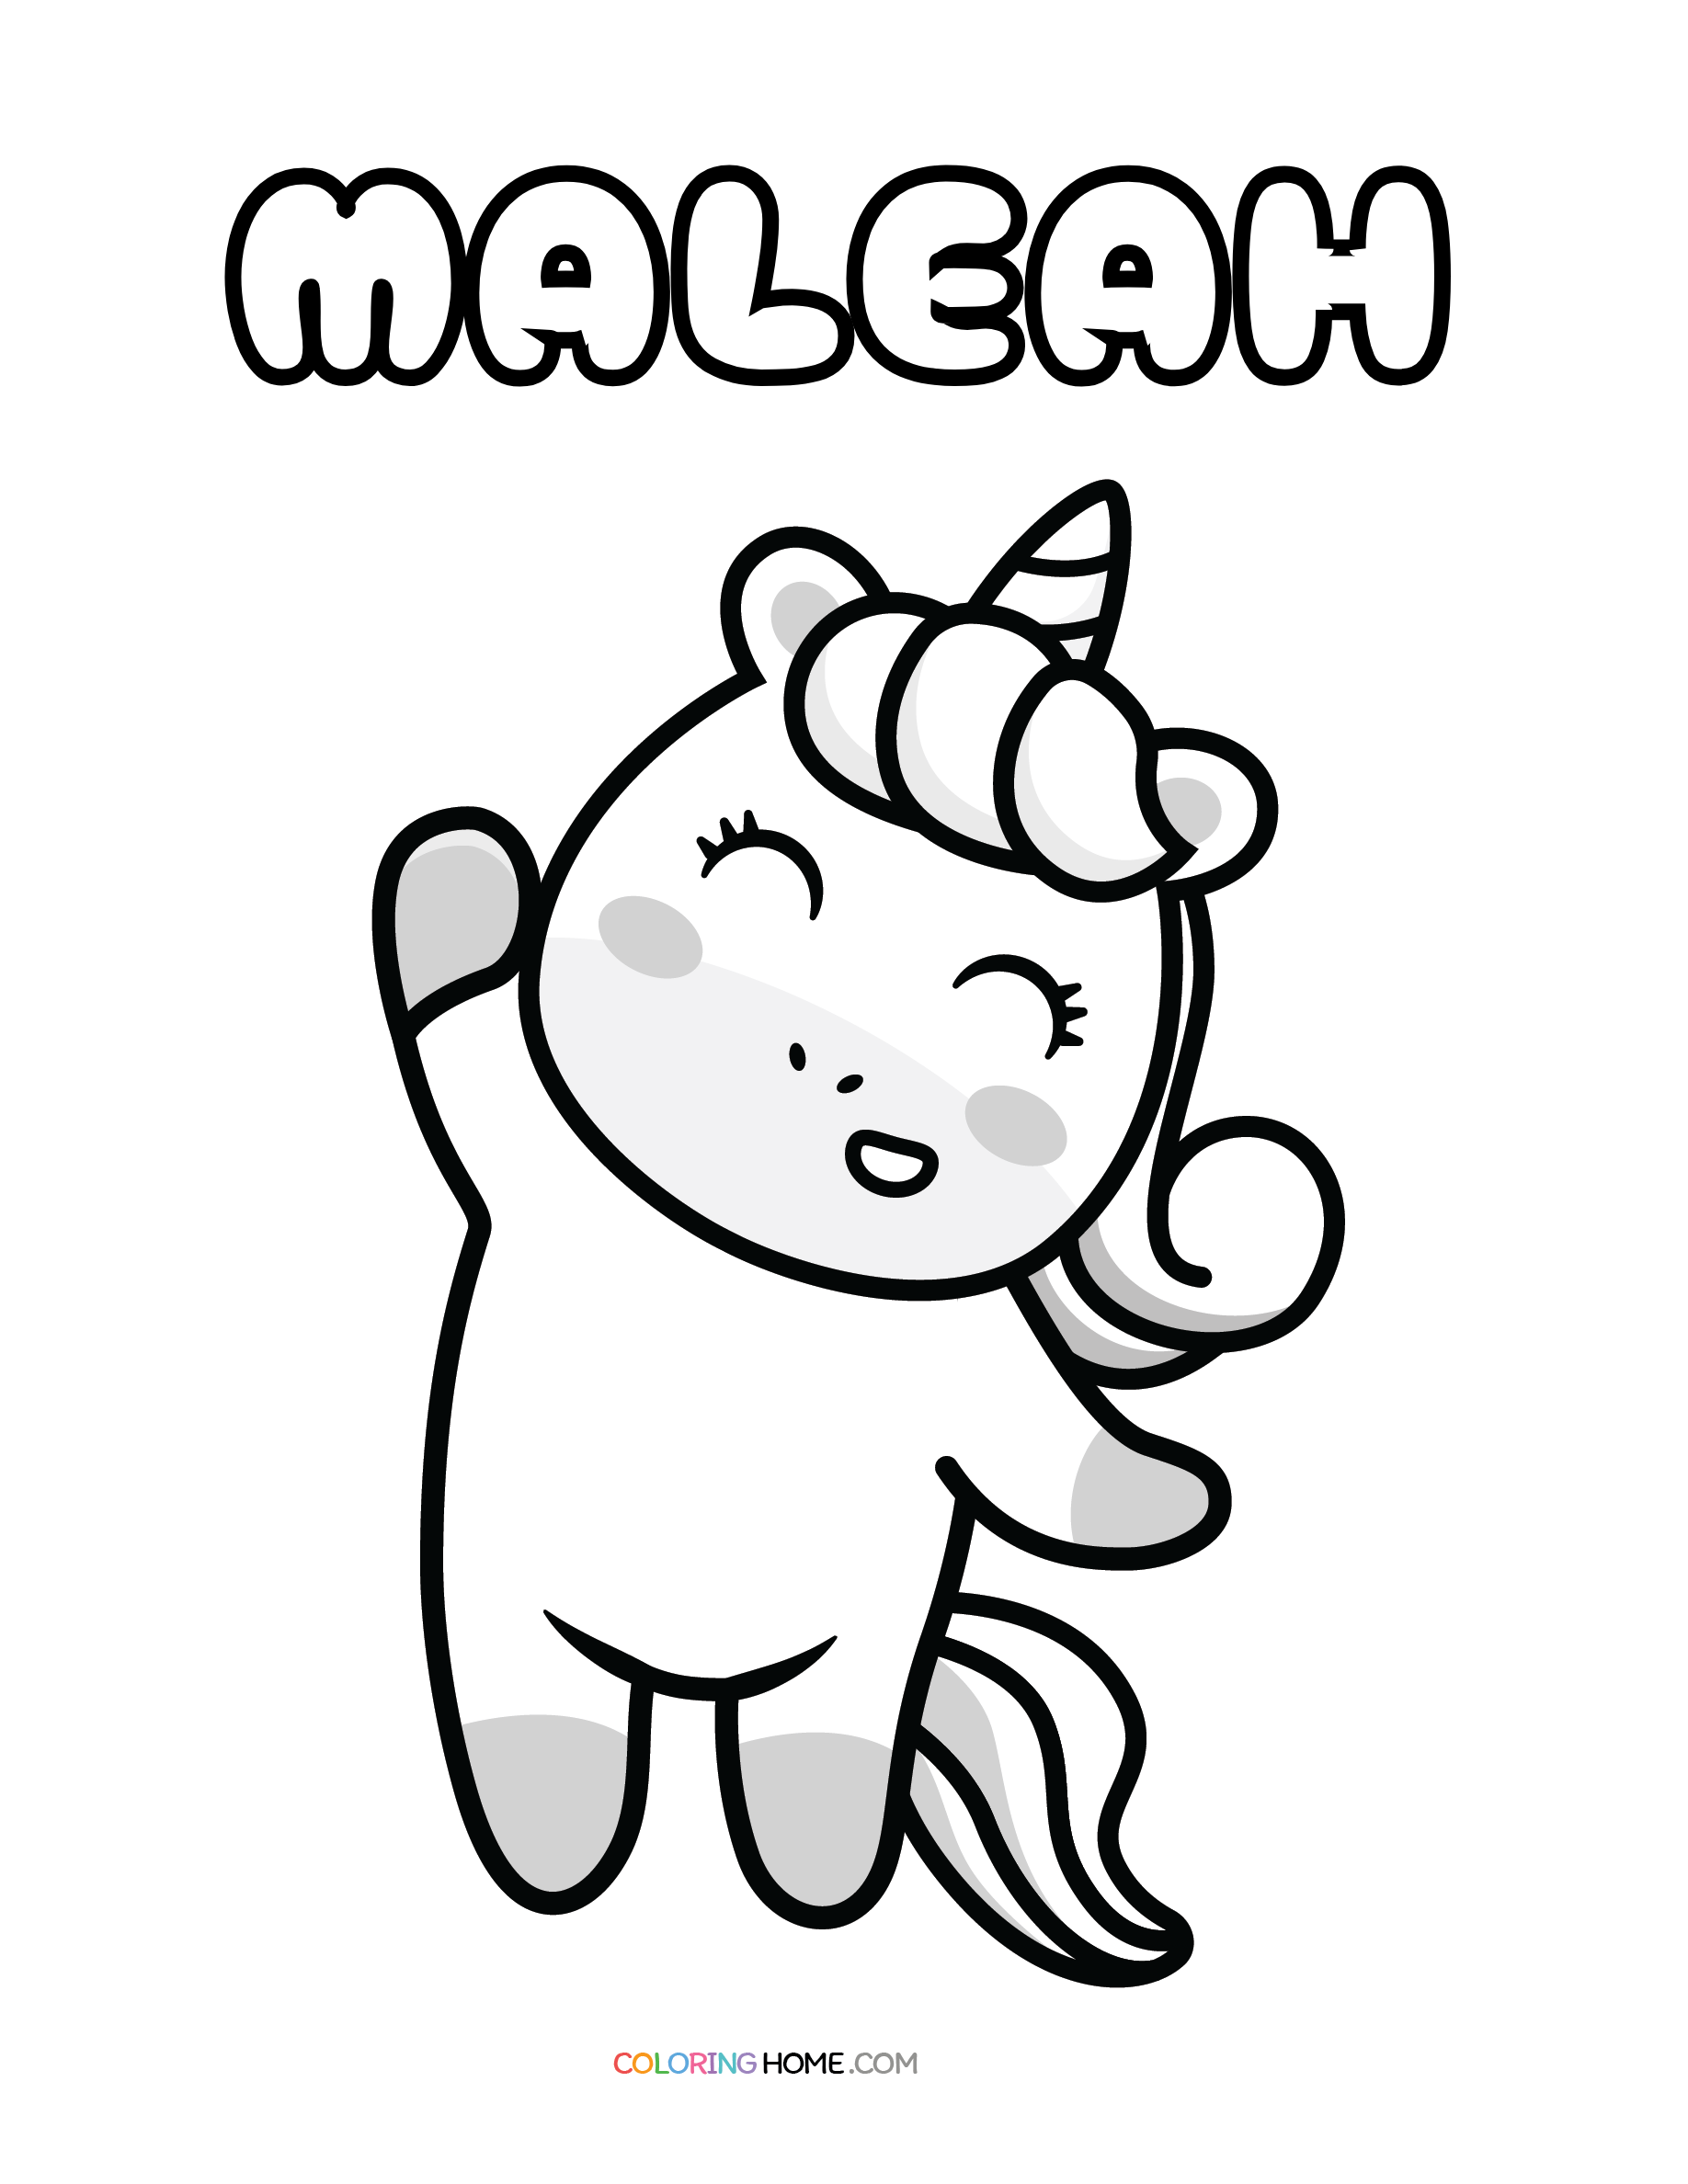 Maleah unicorn coloring page